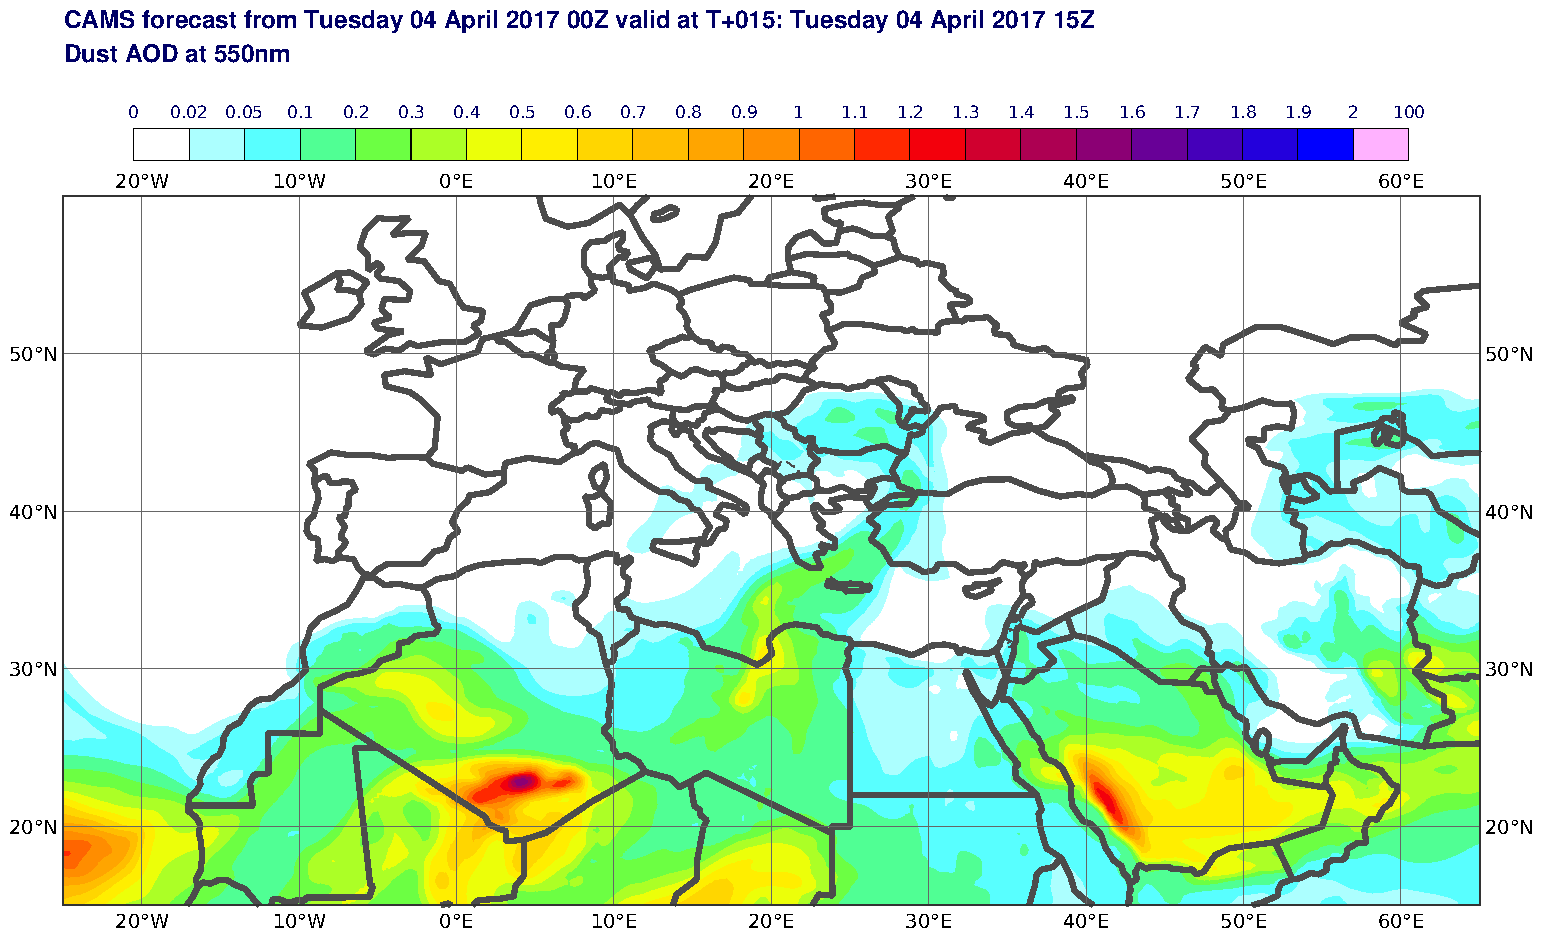 Dust AOD at 550nm valid at T15 - 2017-04-04 15:00